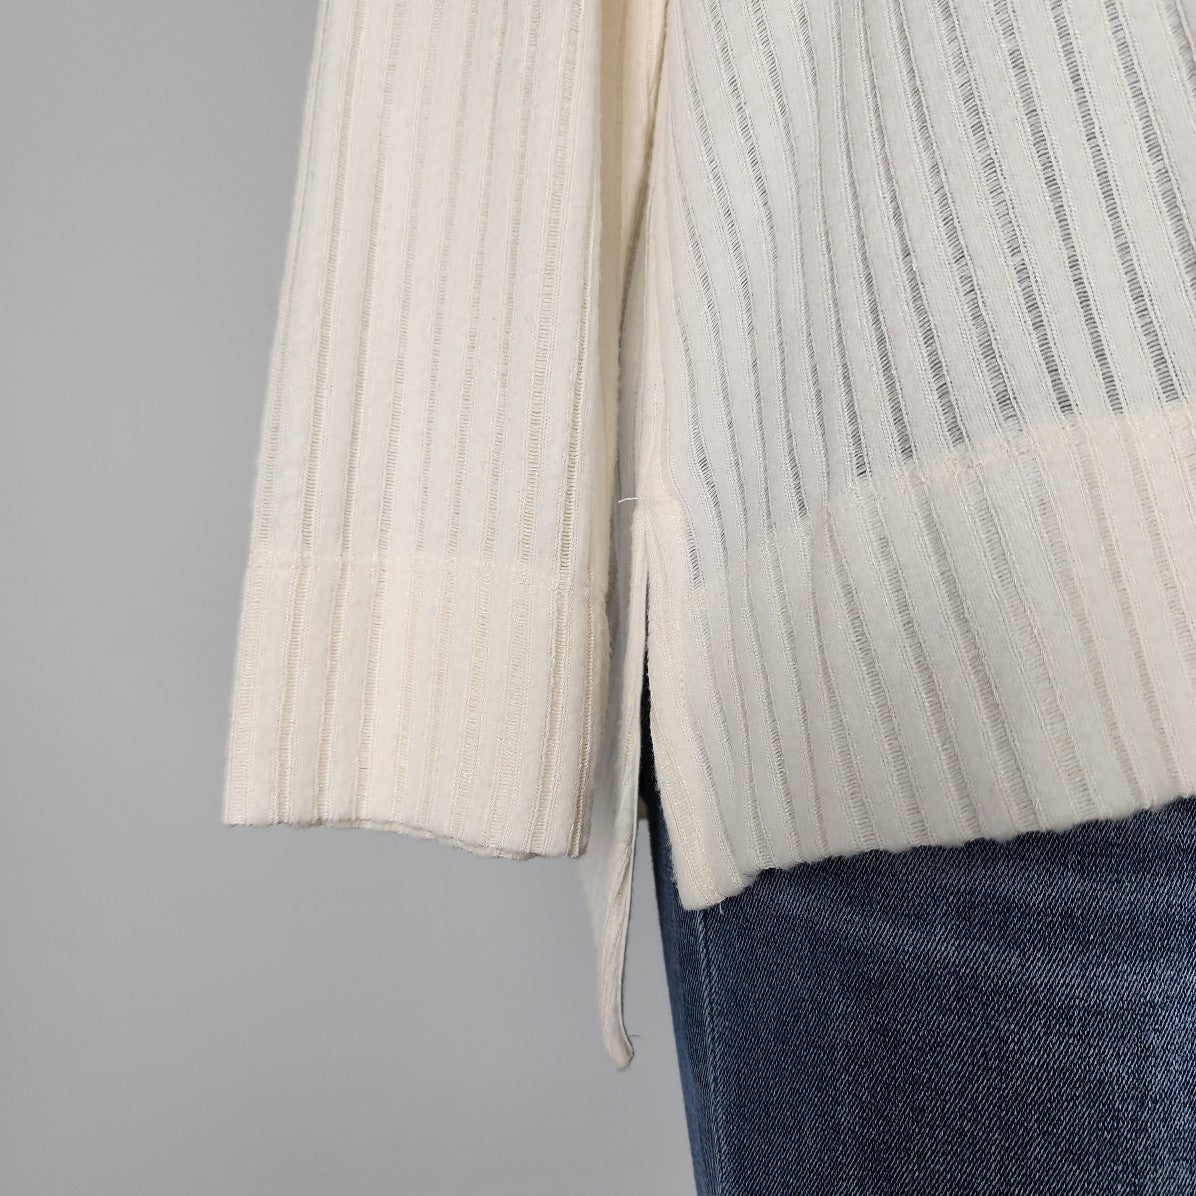 Maeve Cream Knit Cowl Neck Sweater Size M